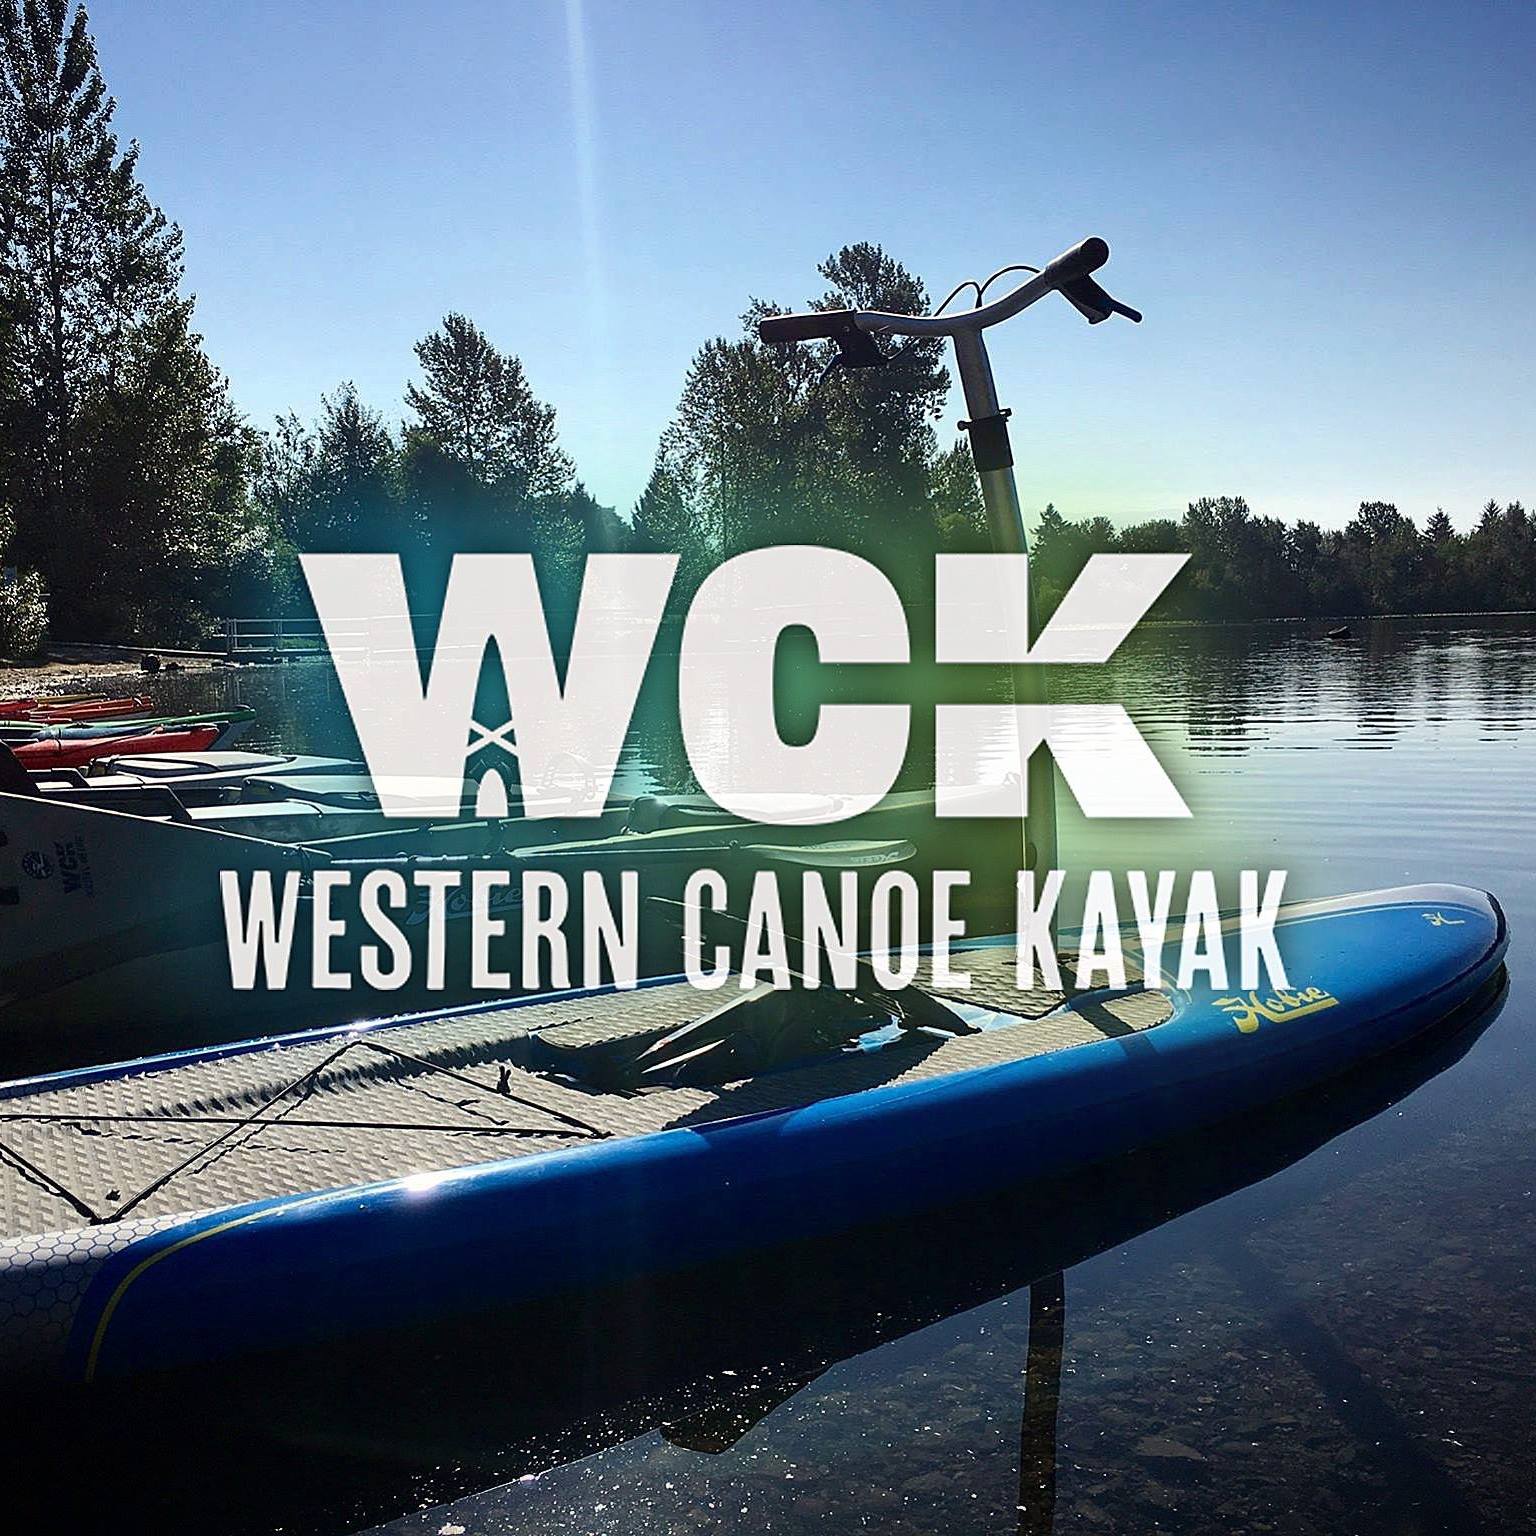 Western Canoeing and Kayaking Inc | Organizational Profile, Work & Jobs